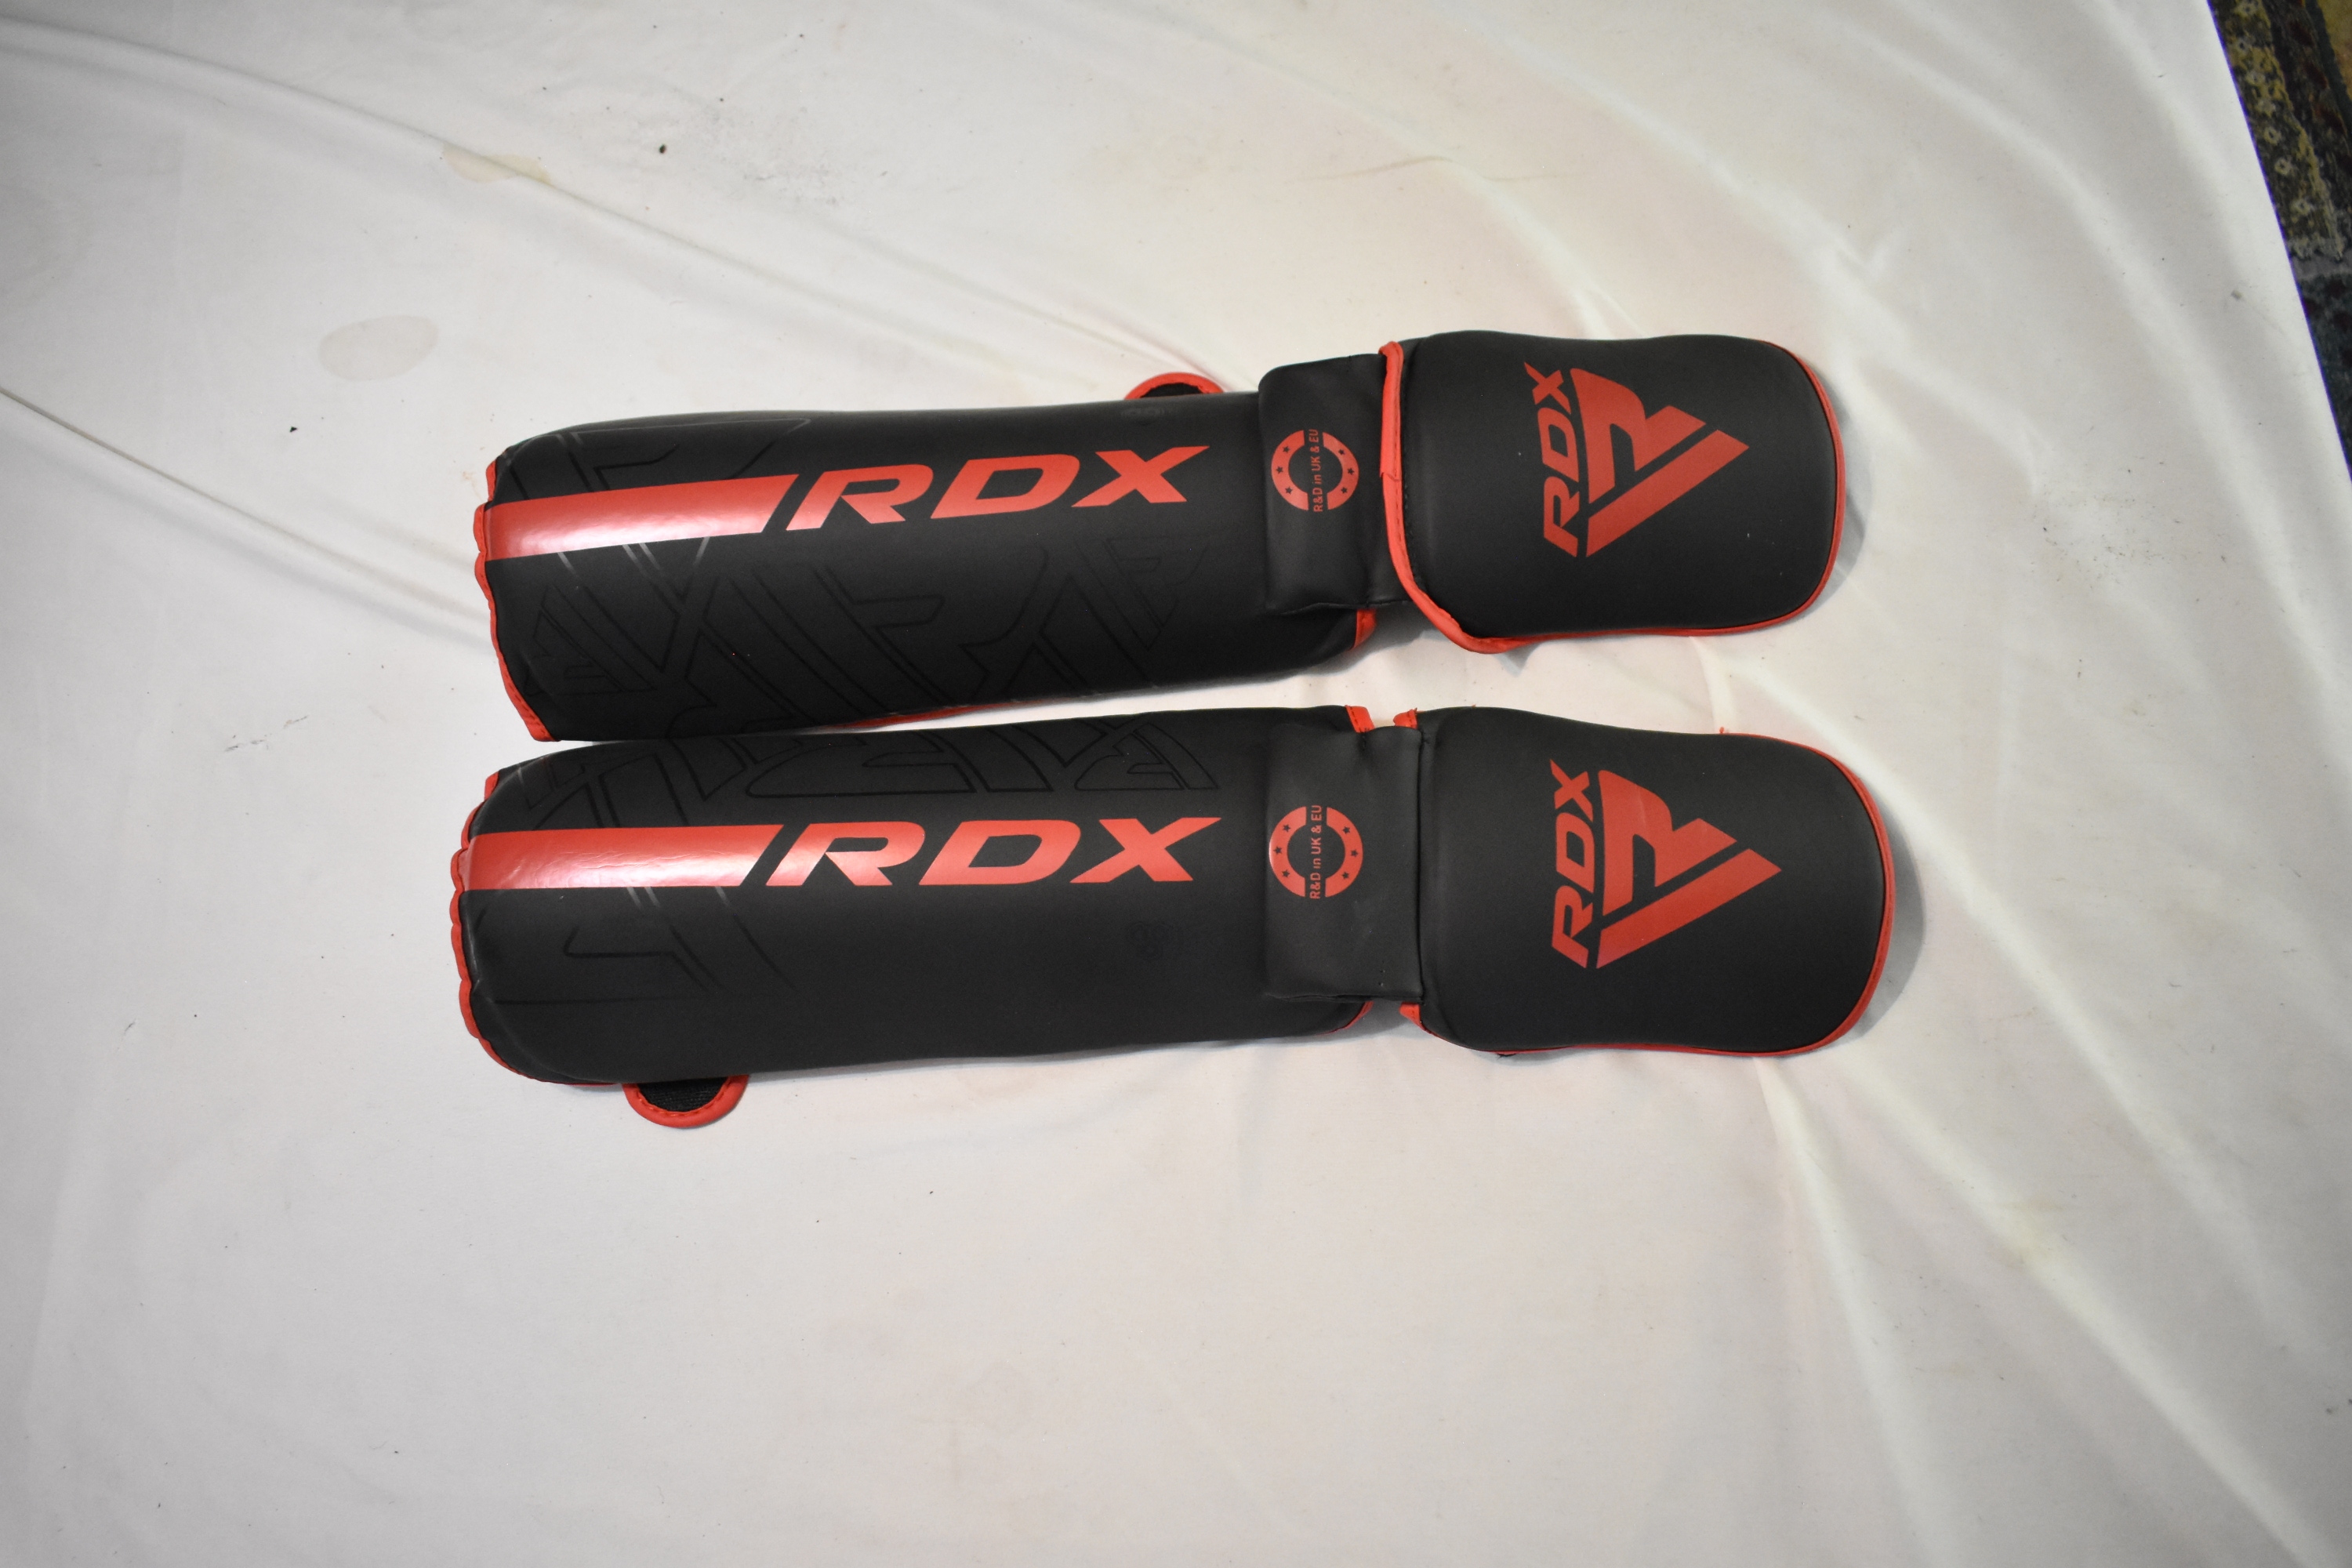 RDX Kara Muay Thai/MMA Shin Protection, Black/Red, Medium - Great Condition!